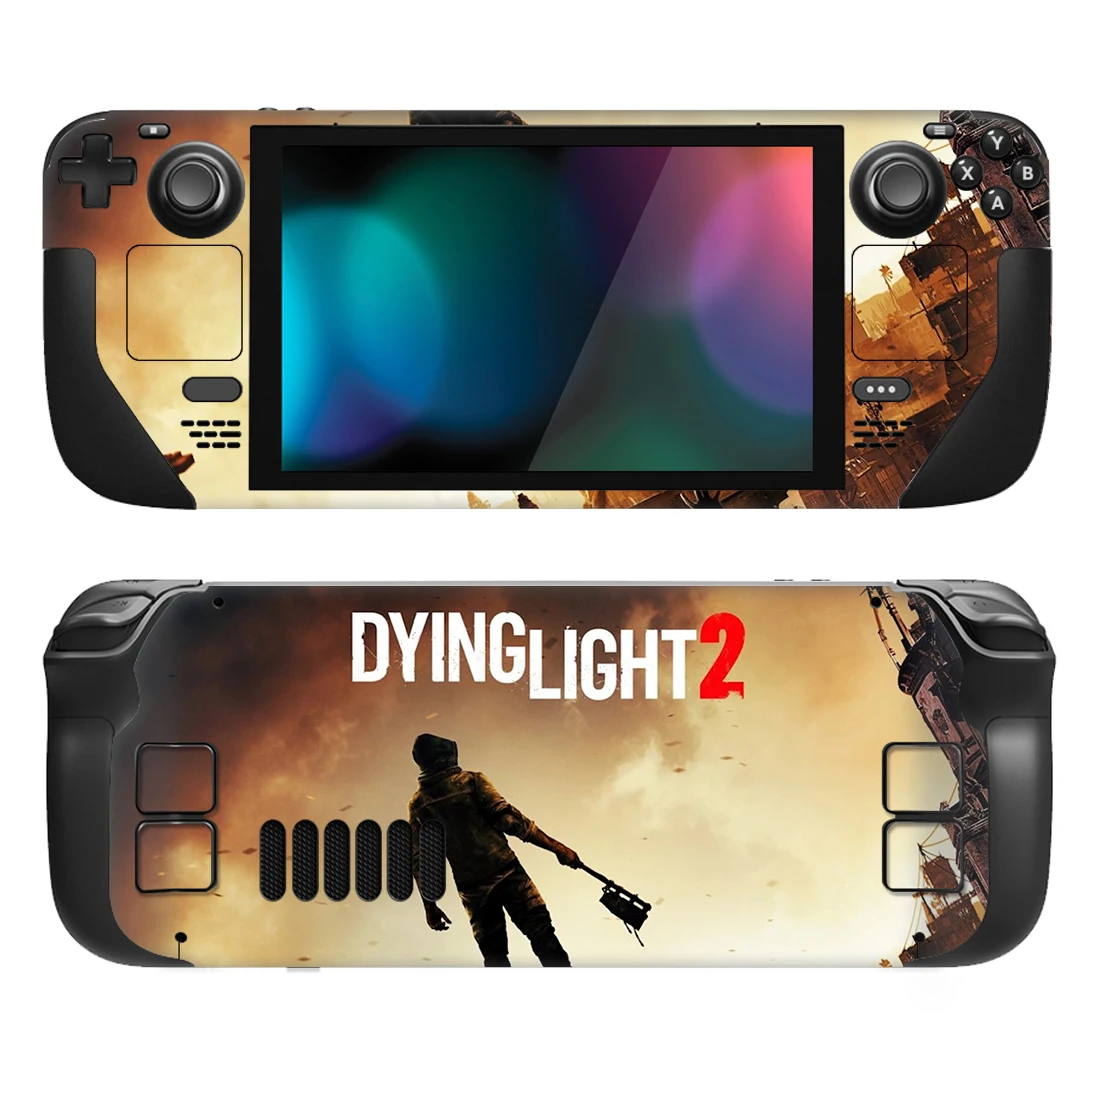 

Dying Light 2 Skin Sticker Decal Cover for Steam Deck Full Set Protective Skin Vinyl